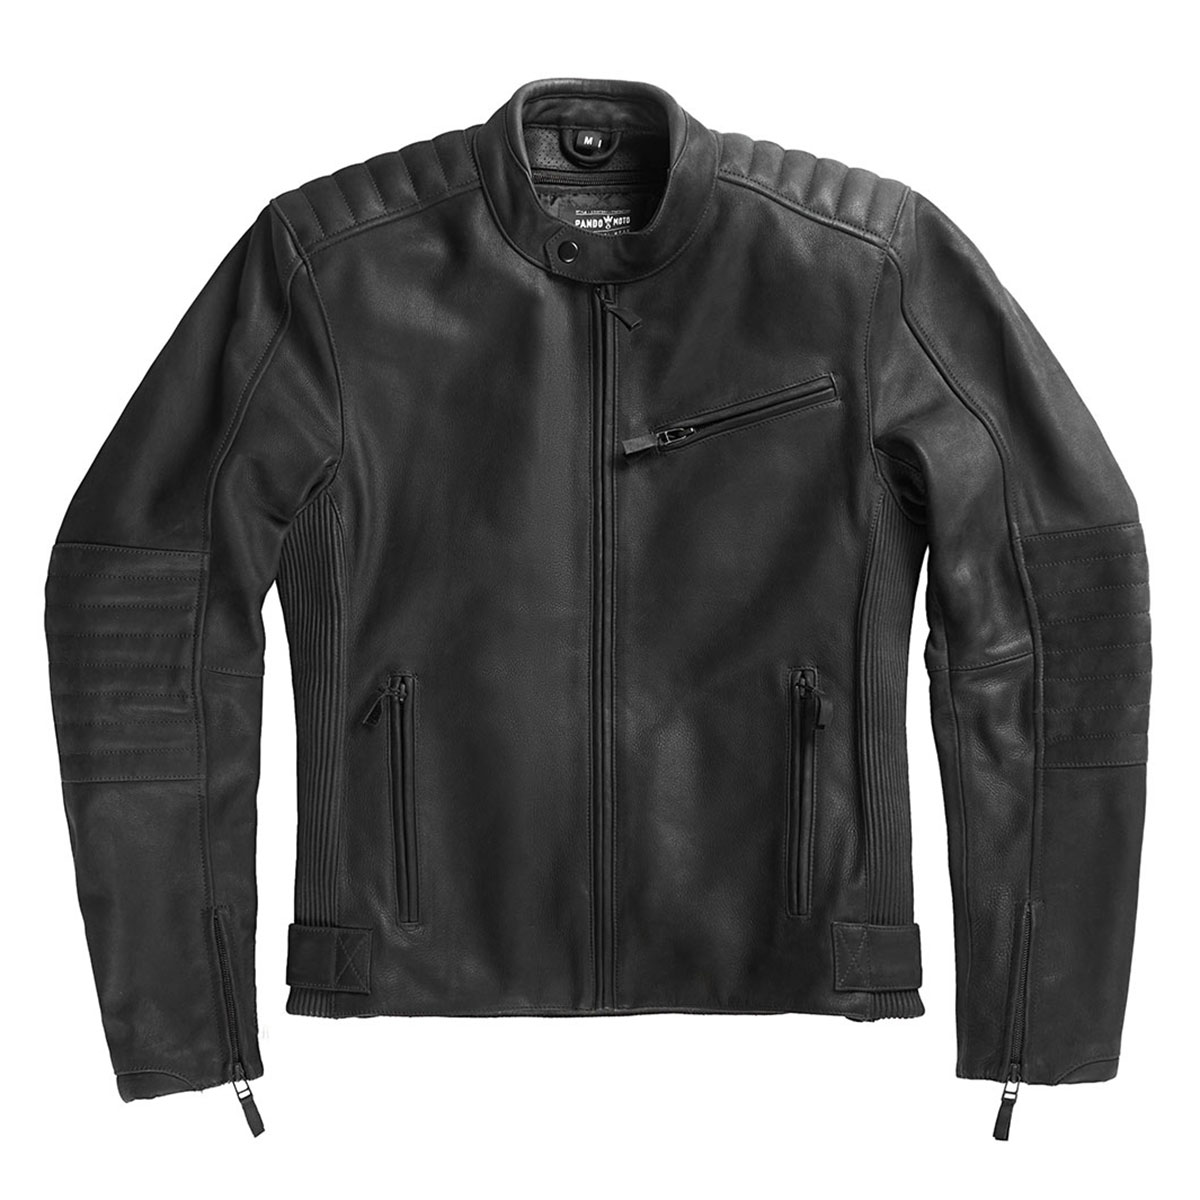 Pando Moto Tatami LT 01 Leather Motorcycle Jacket